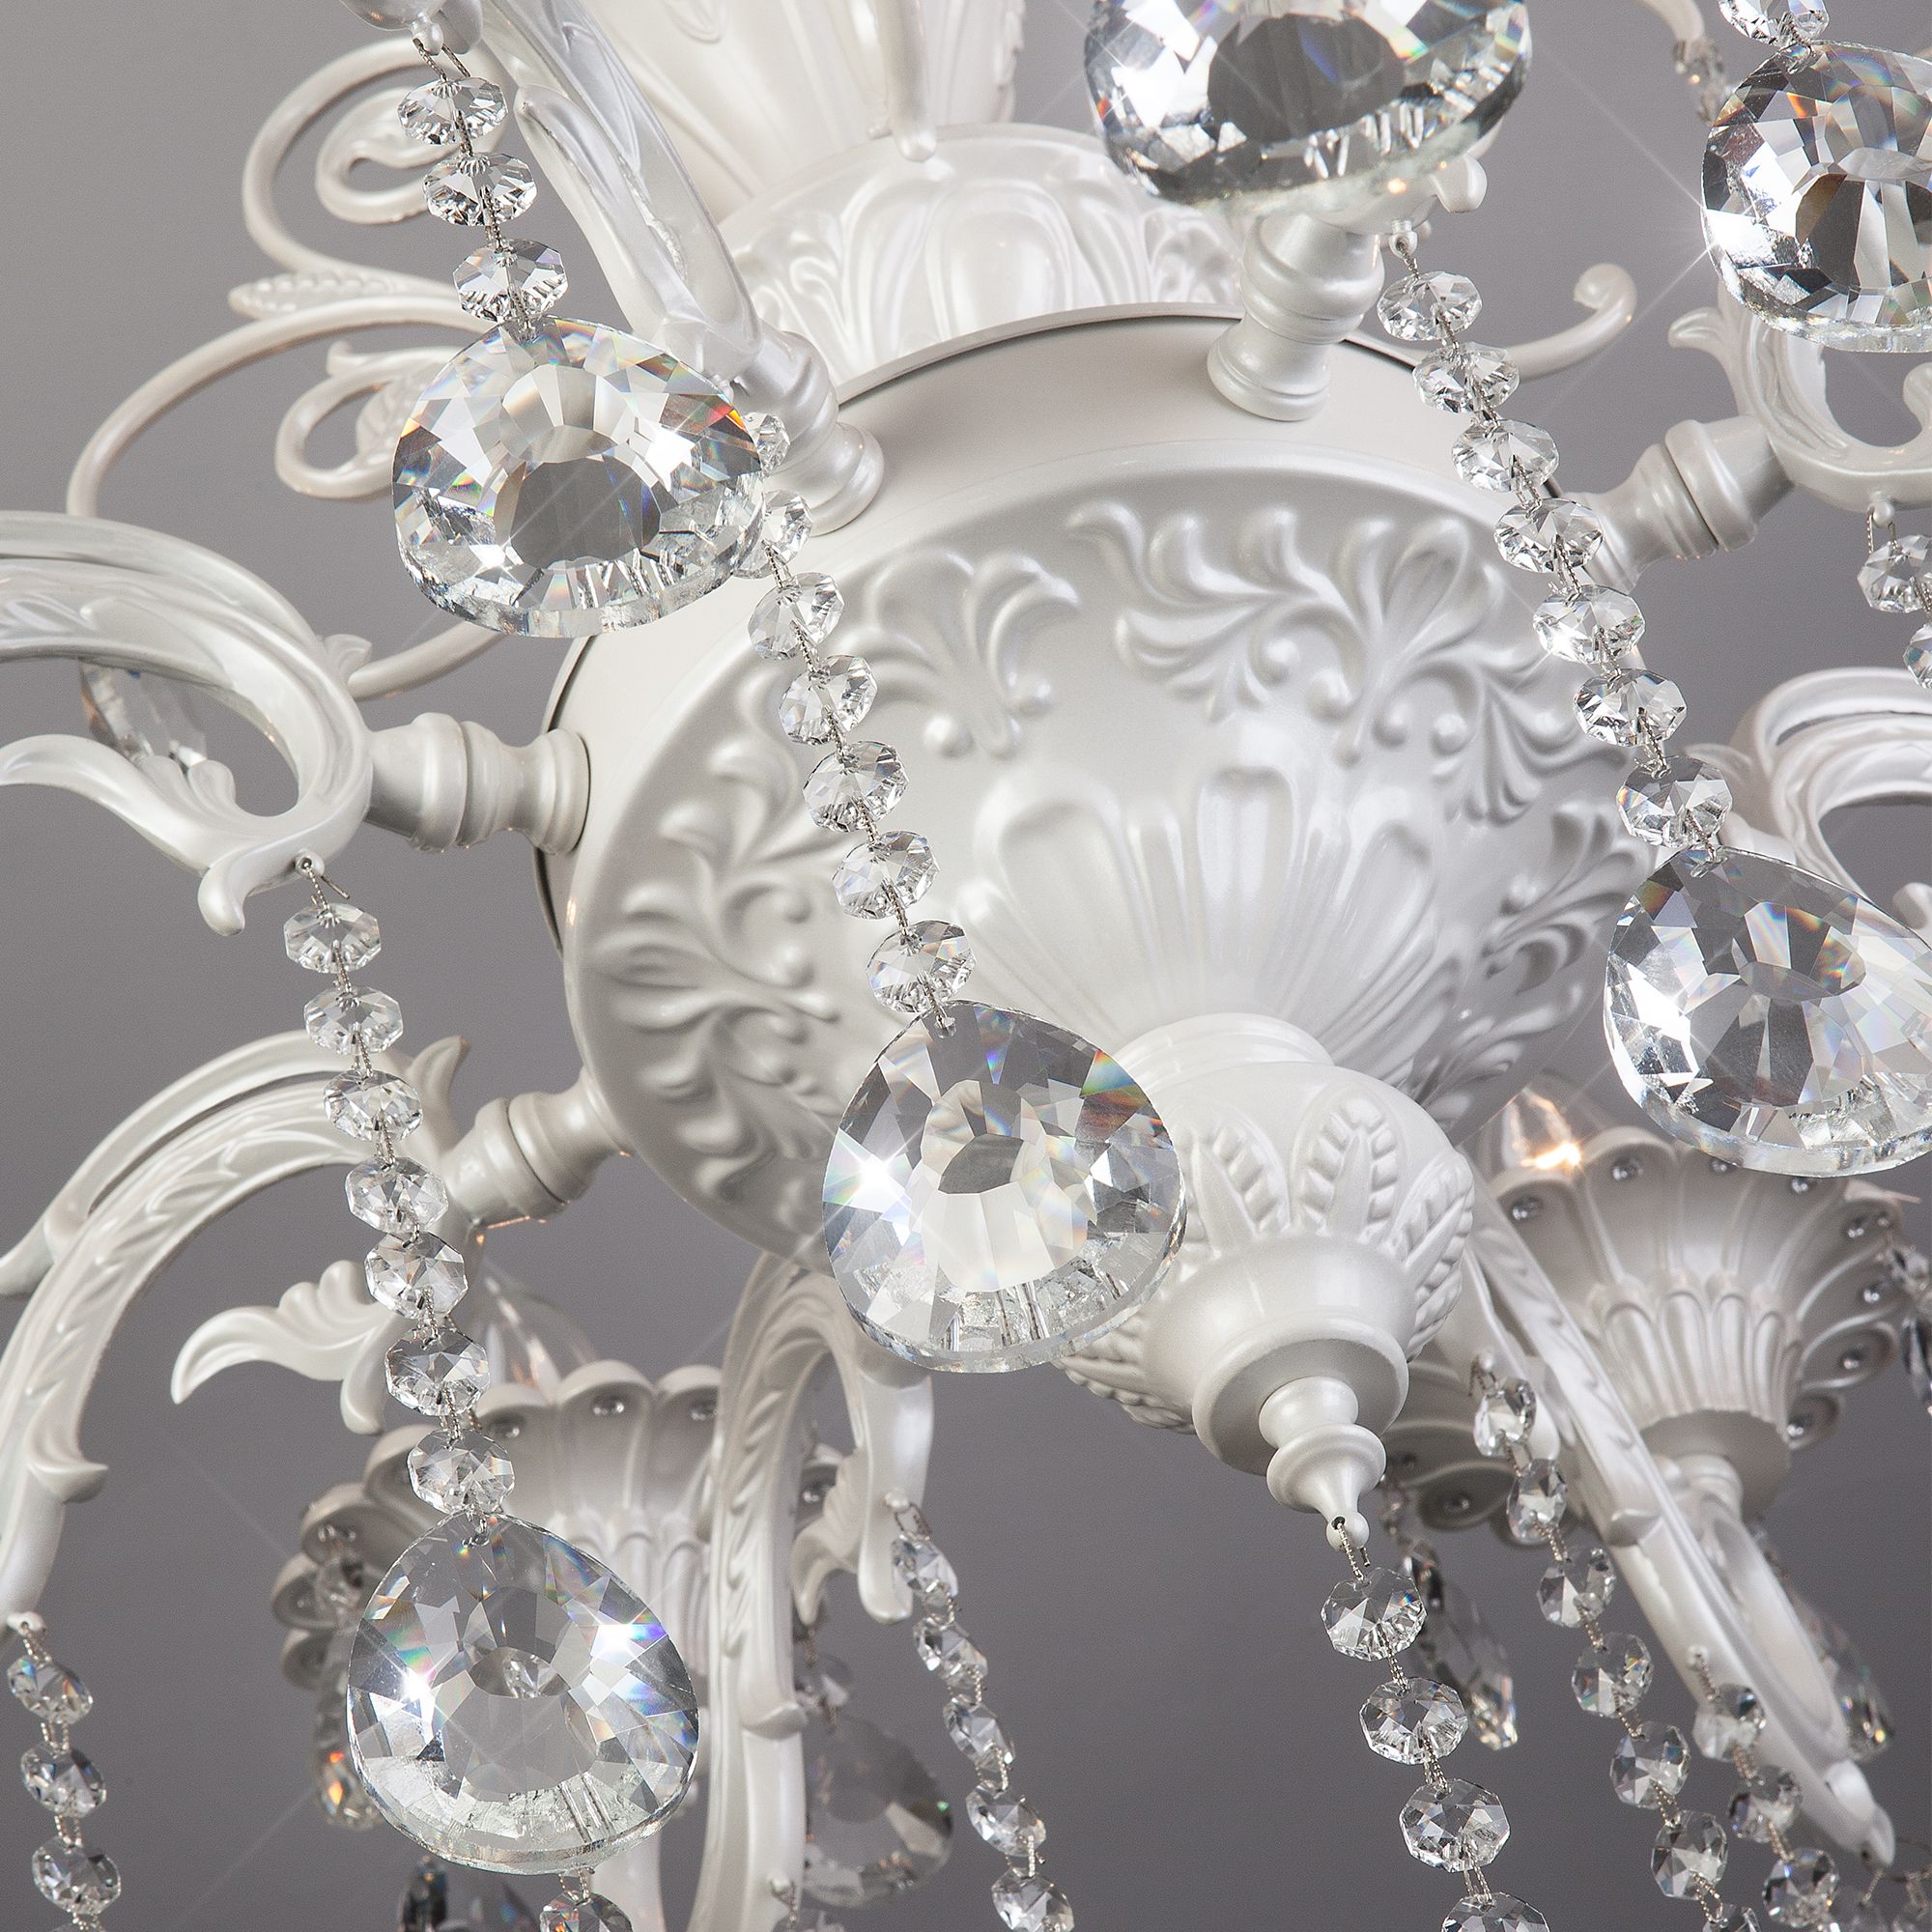 Подвесная люстра с хрусталем Bogate's Tivoli 294/8 белый. Фото 2